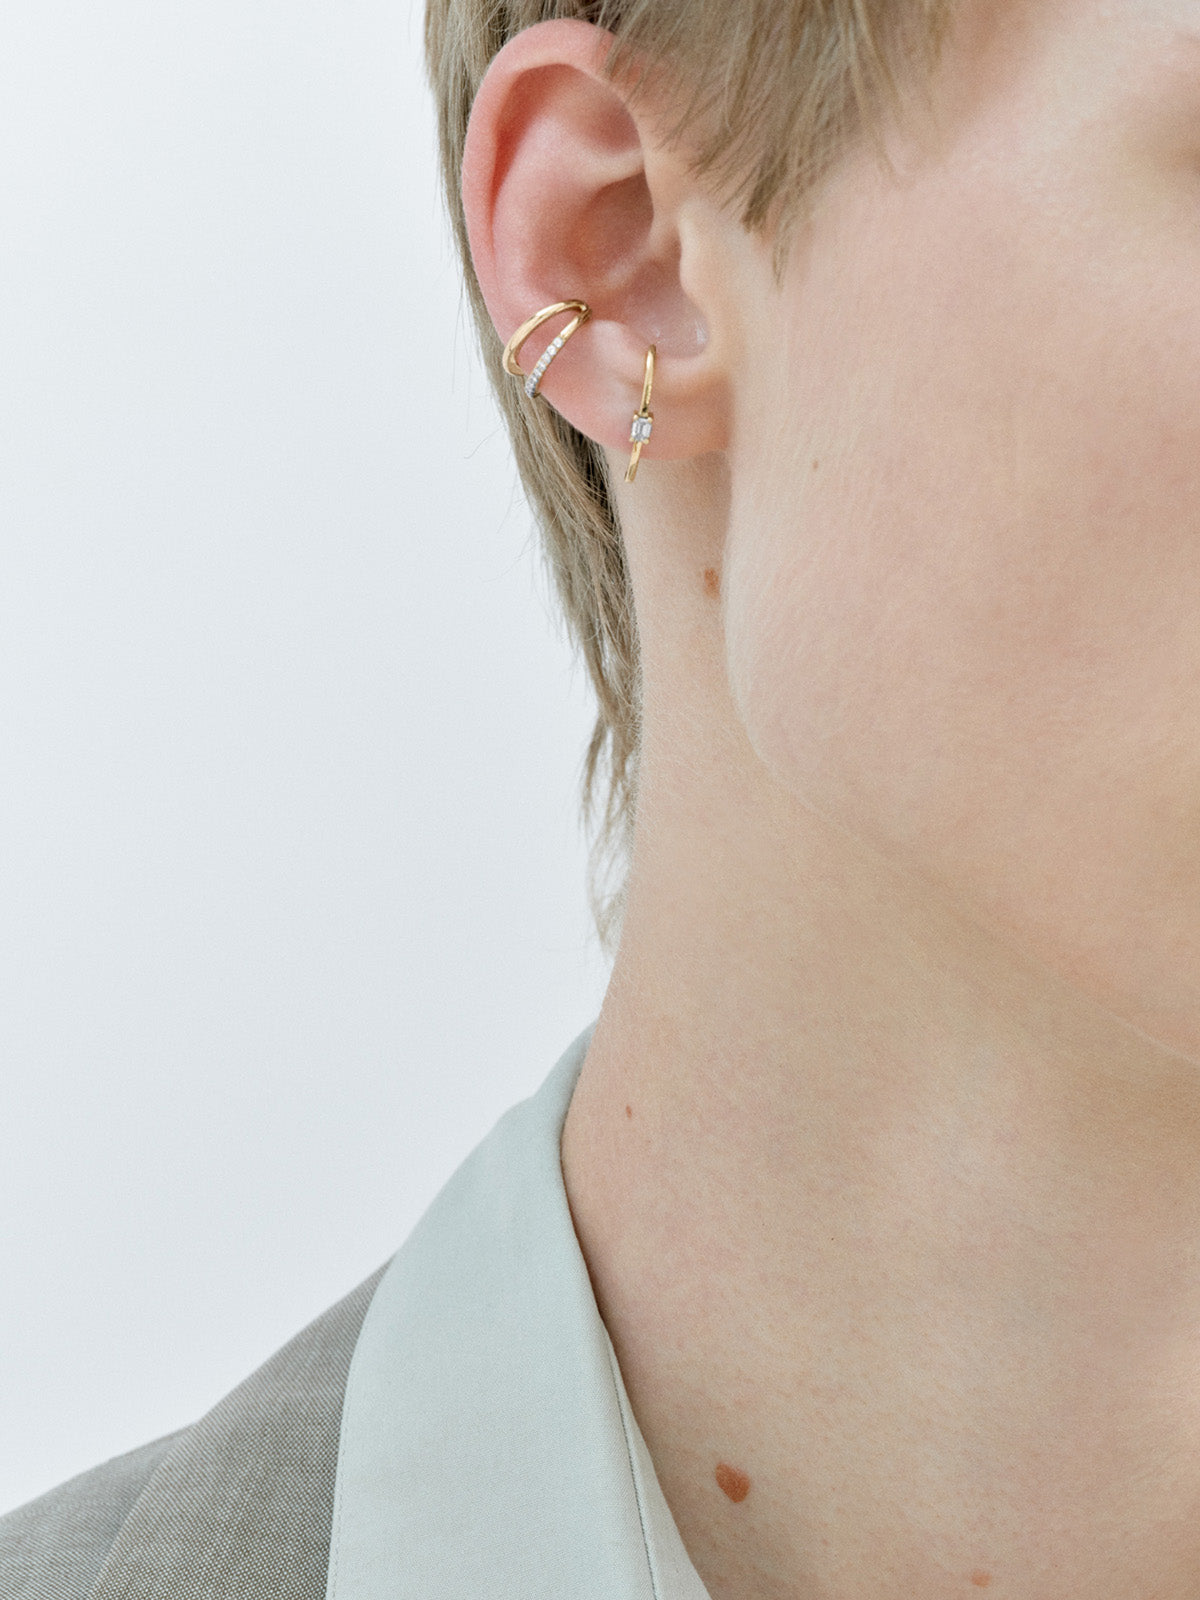 Emerald-Cut Diamond Earring 0.10